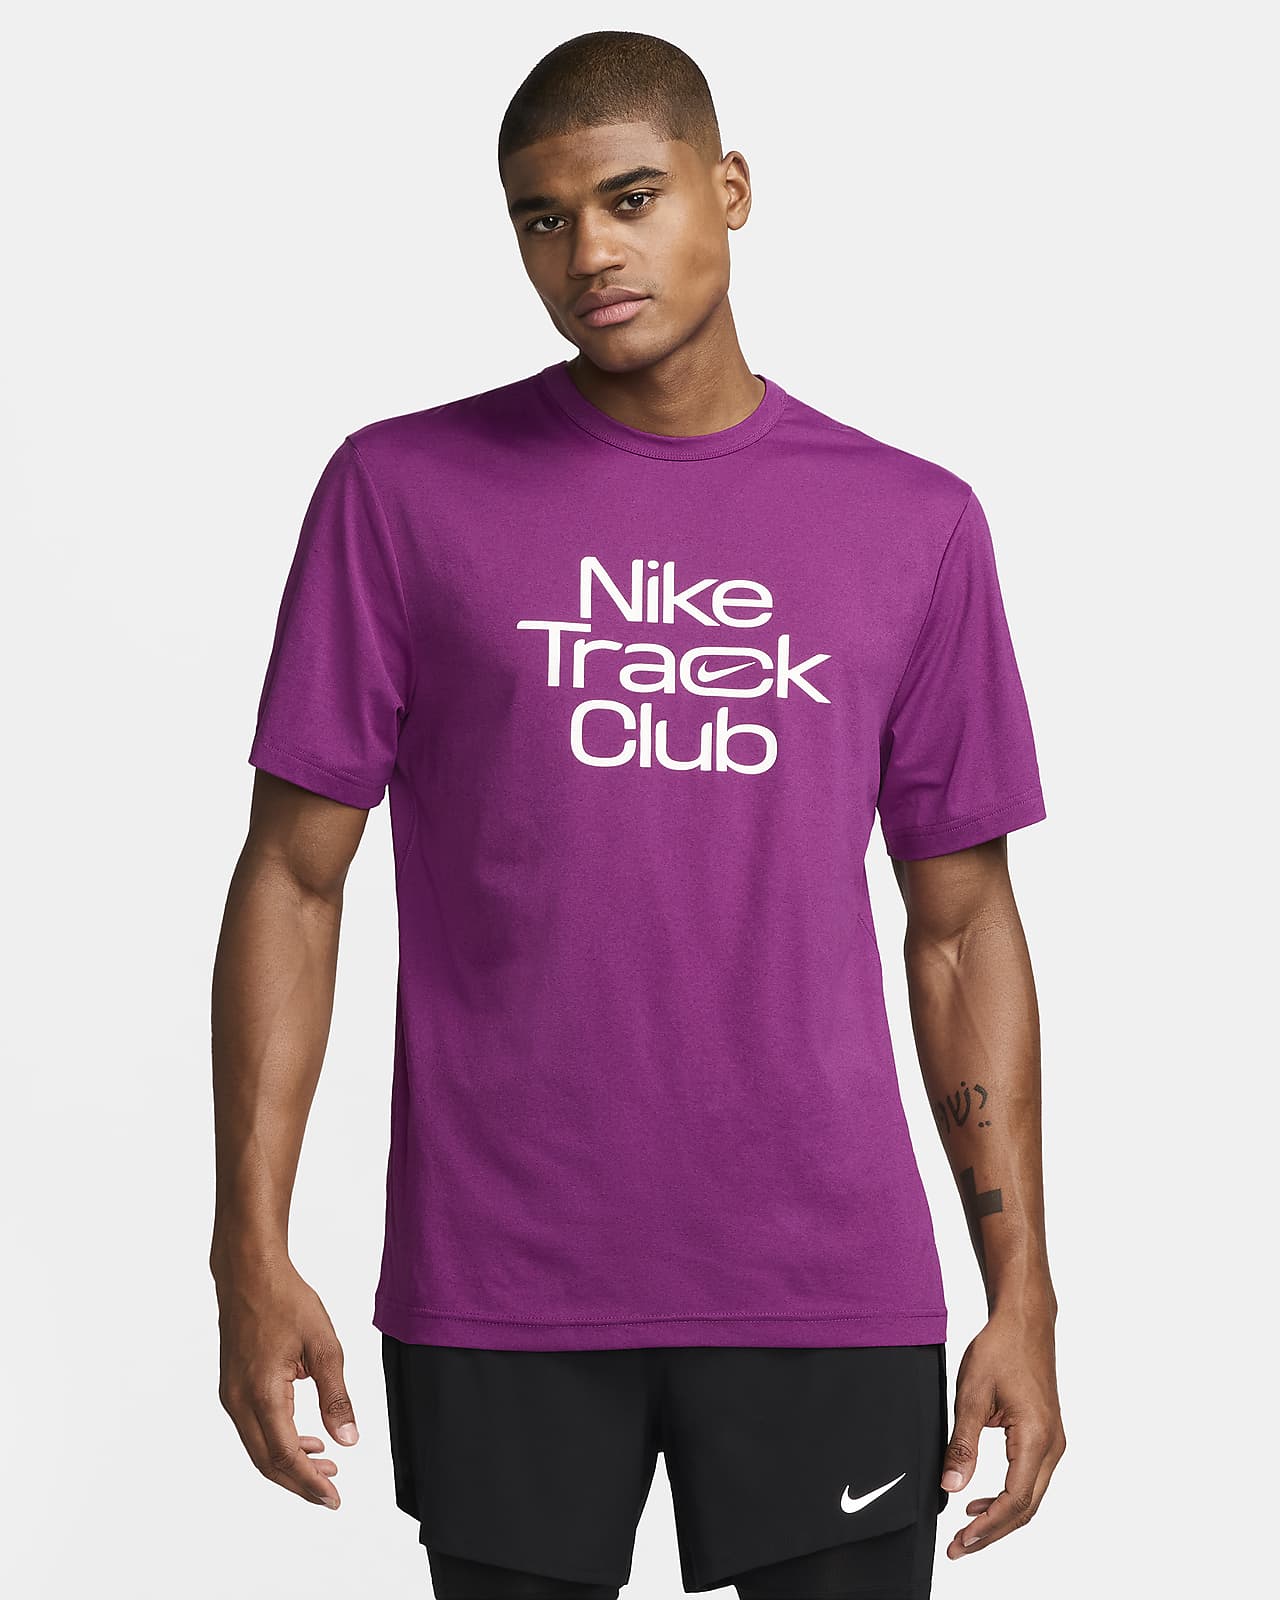 Camisola de running de manga curta Dri-FIT Nike Track Club para homem